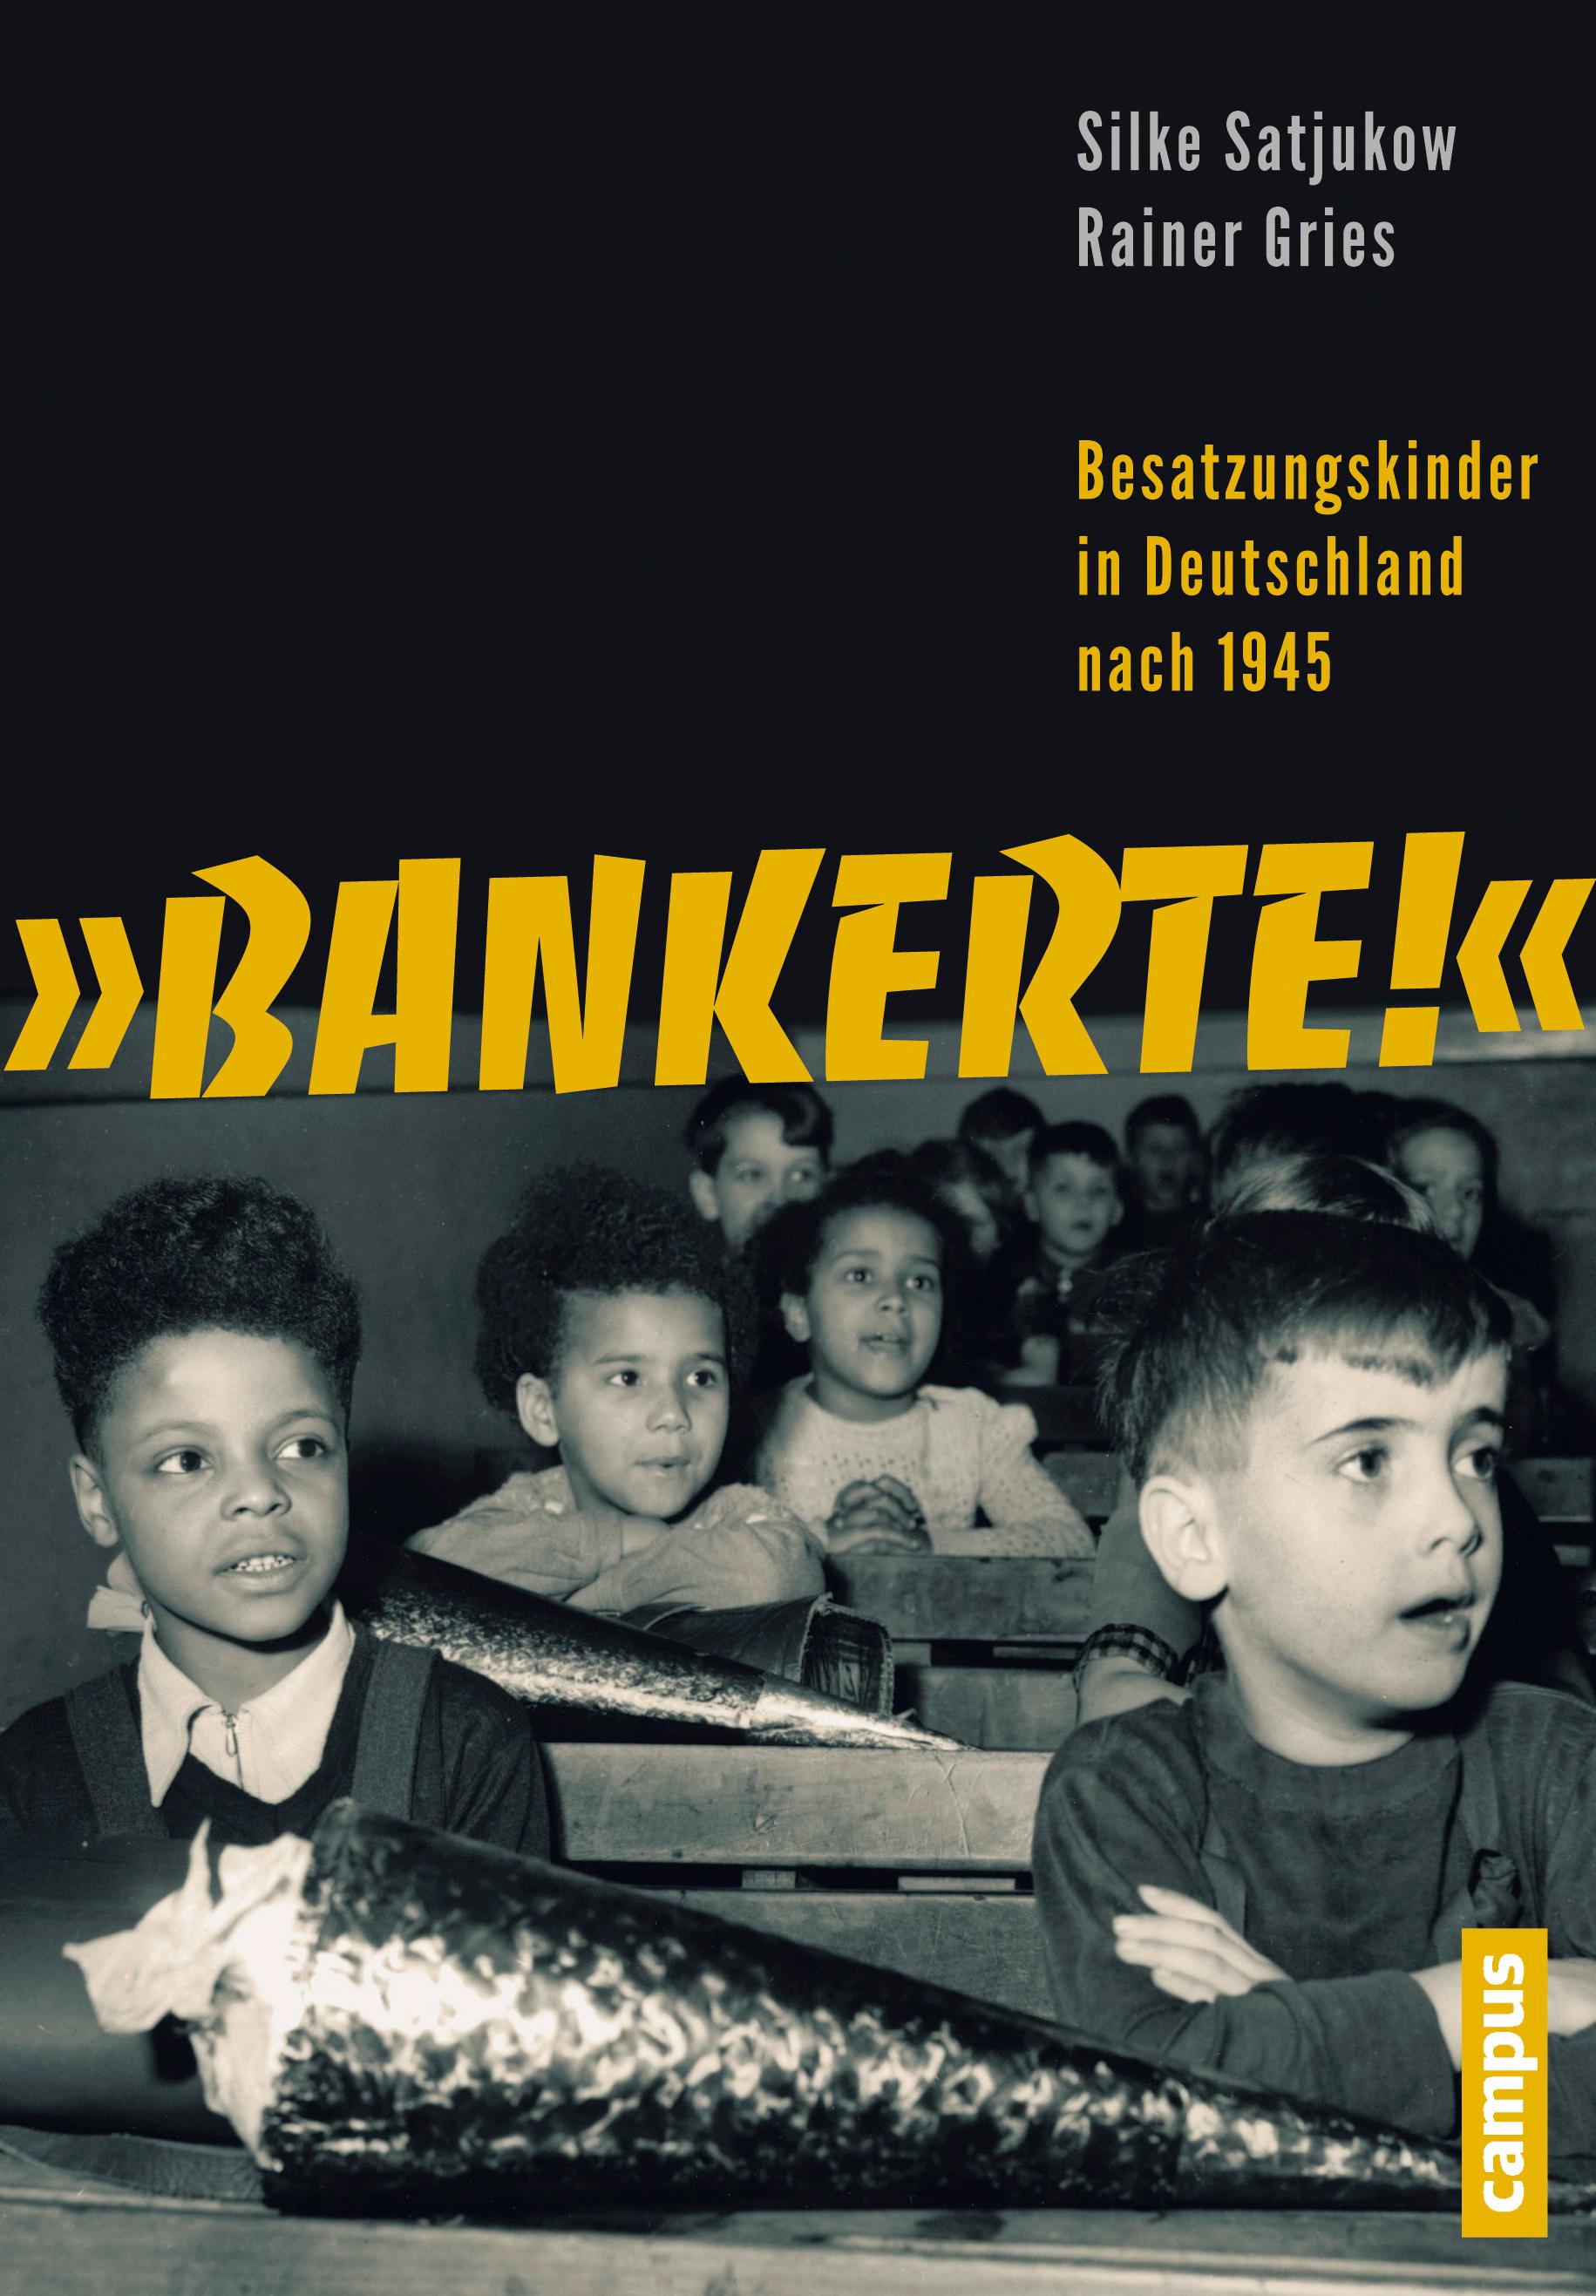 Bankerte! - Satjukow, Silke|Gries, Rainer